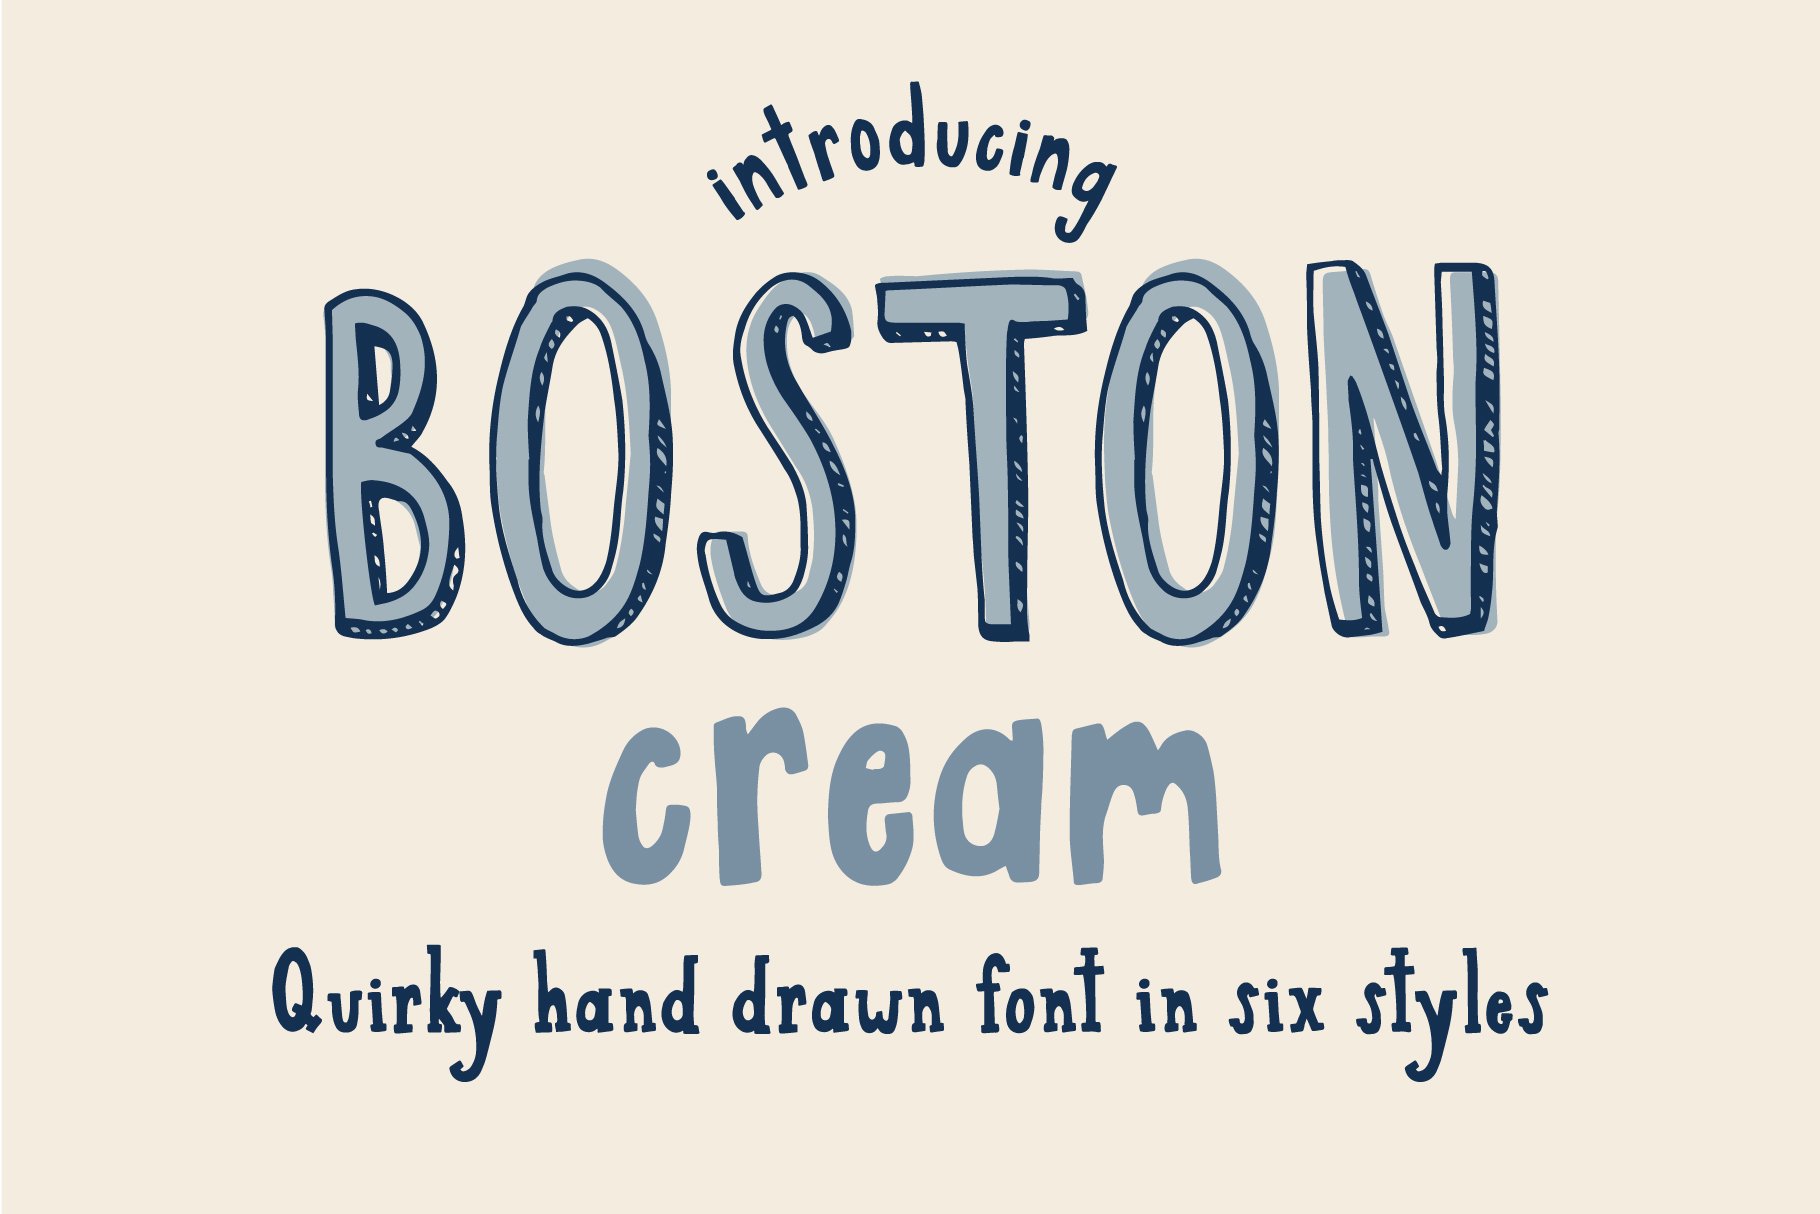 Boston Cream Sans and Serif cover image.